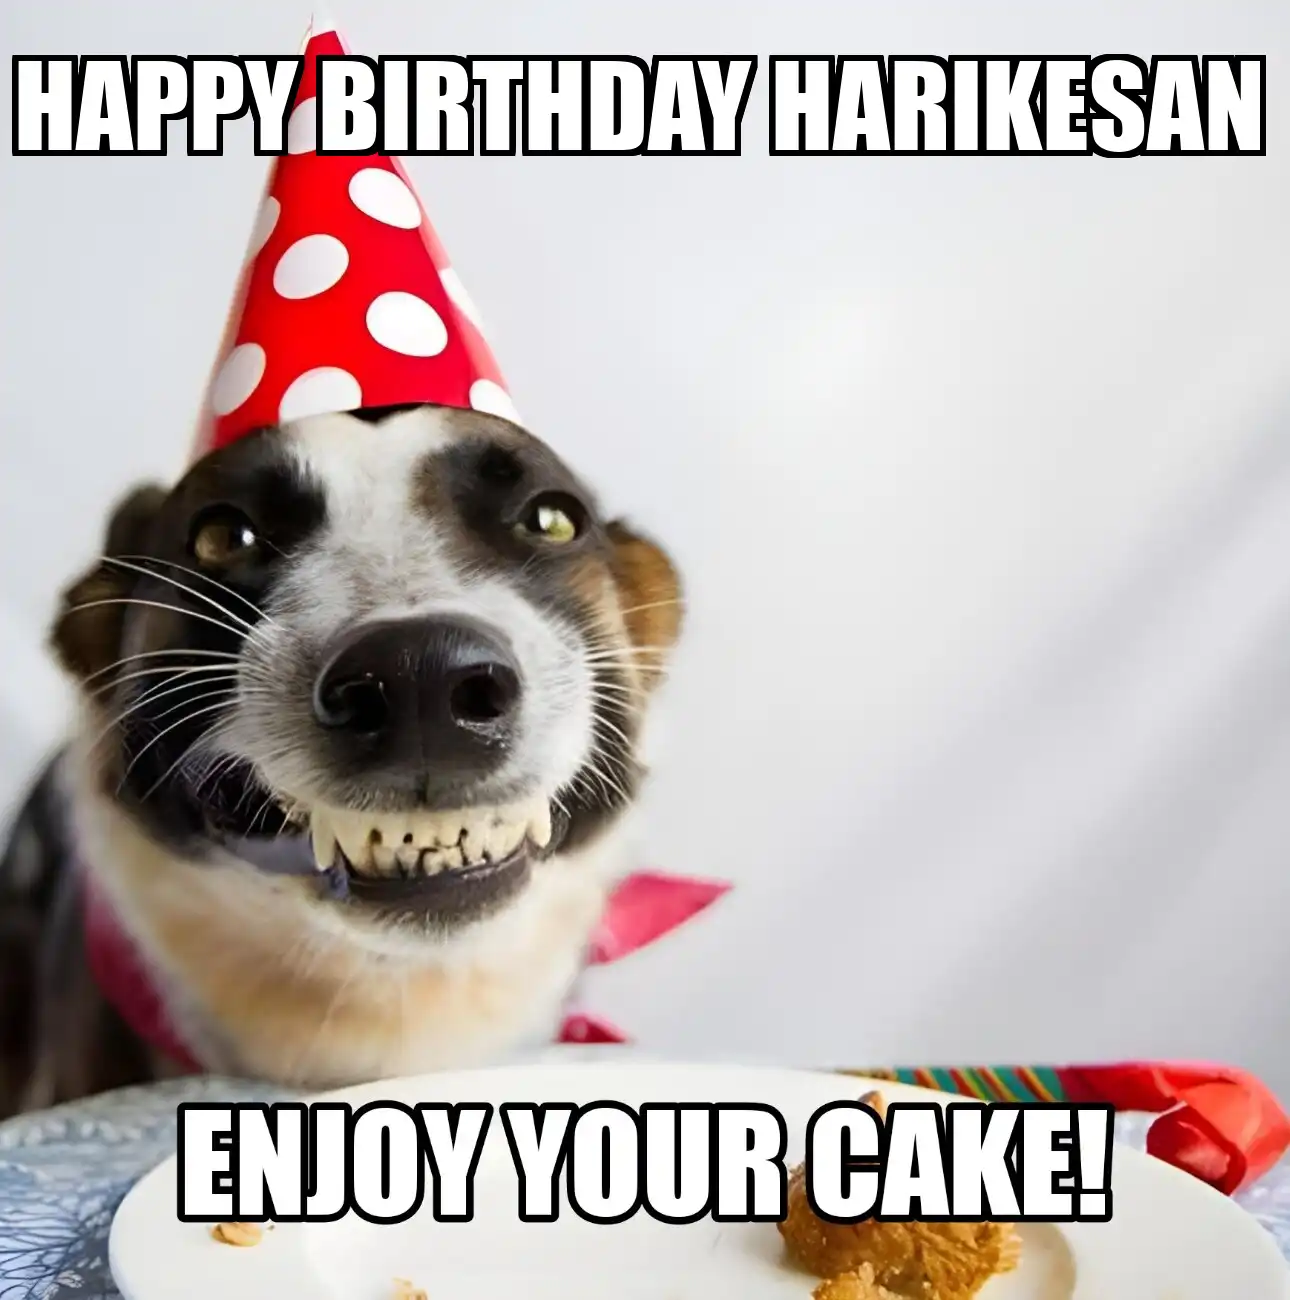 Happy Birthday Harikesan Enjoy Your Cake Dog Meme